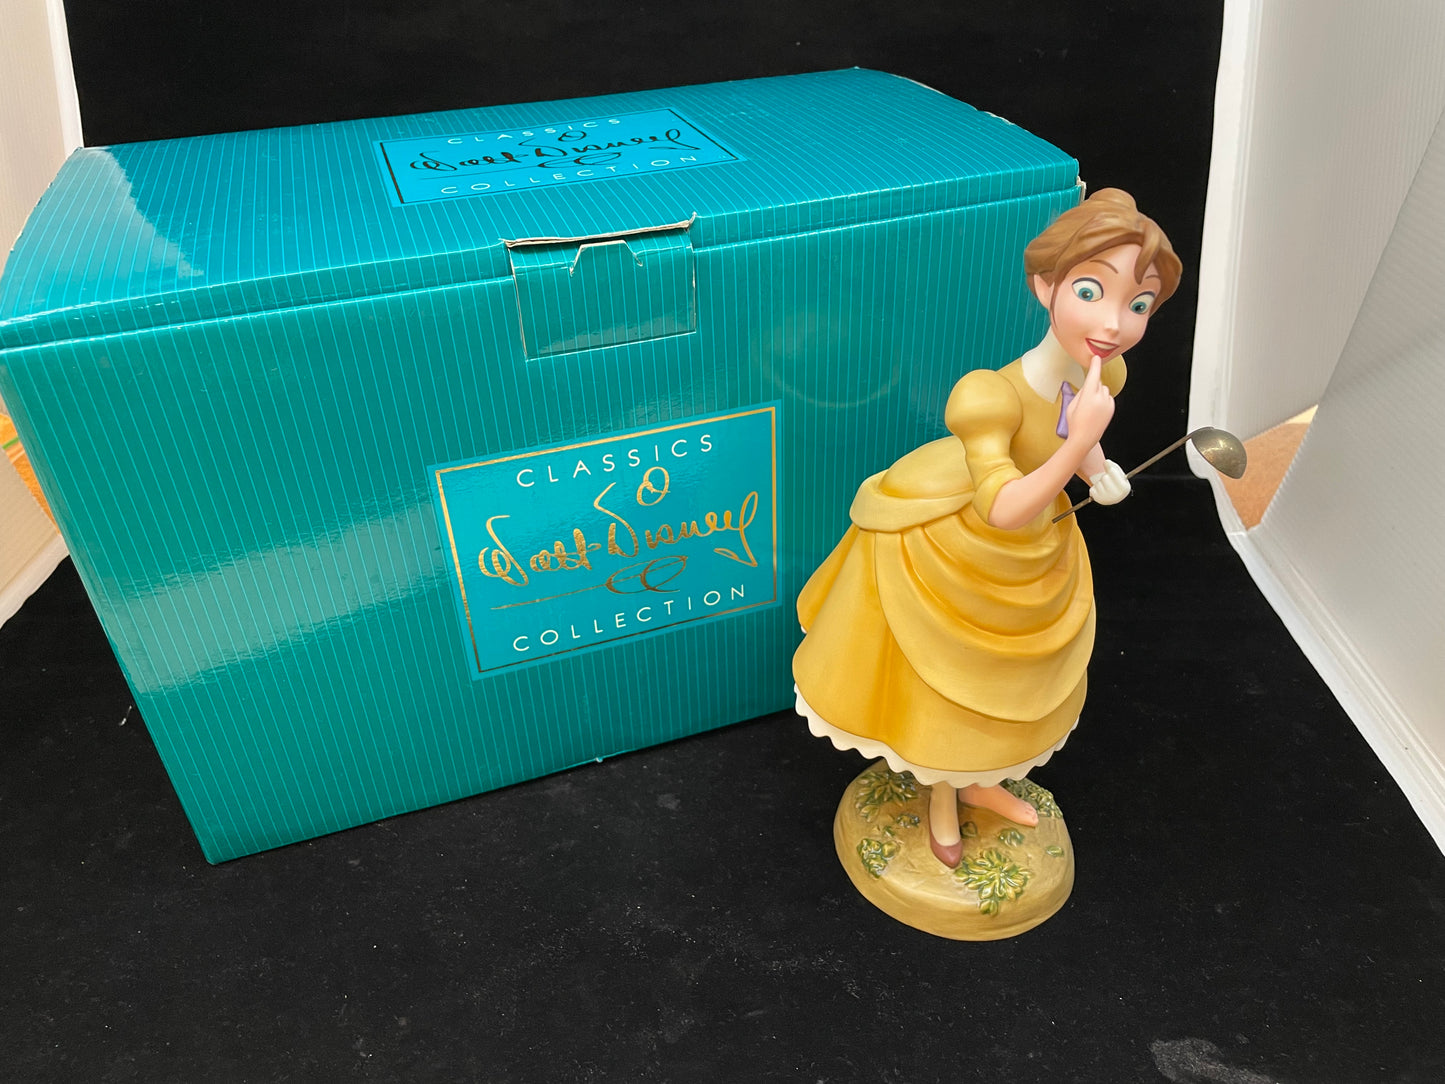 Walt Disney Classics Collection "Miss Jane Porter" Figurine